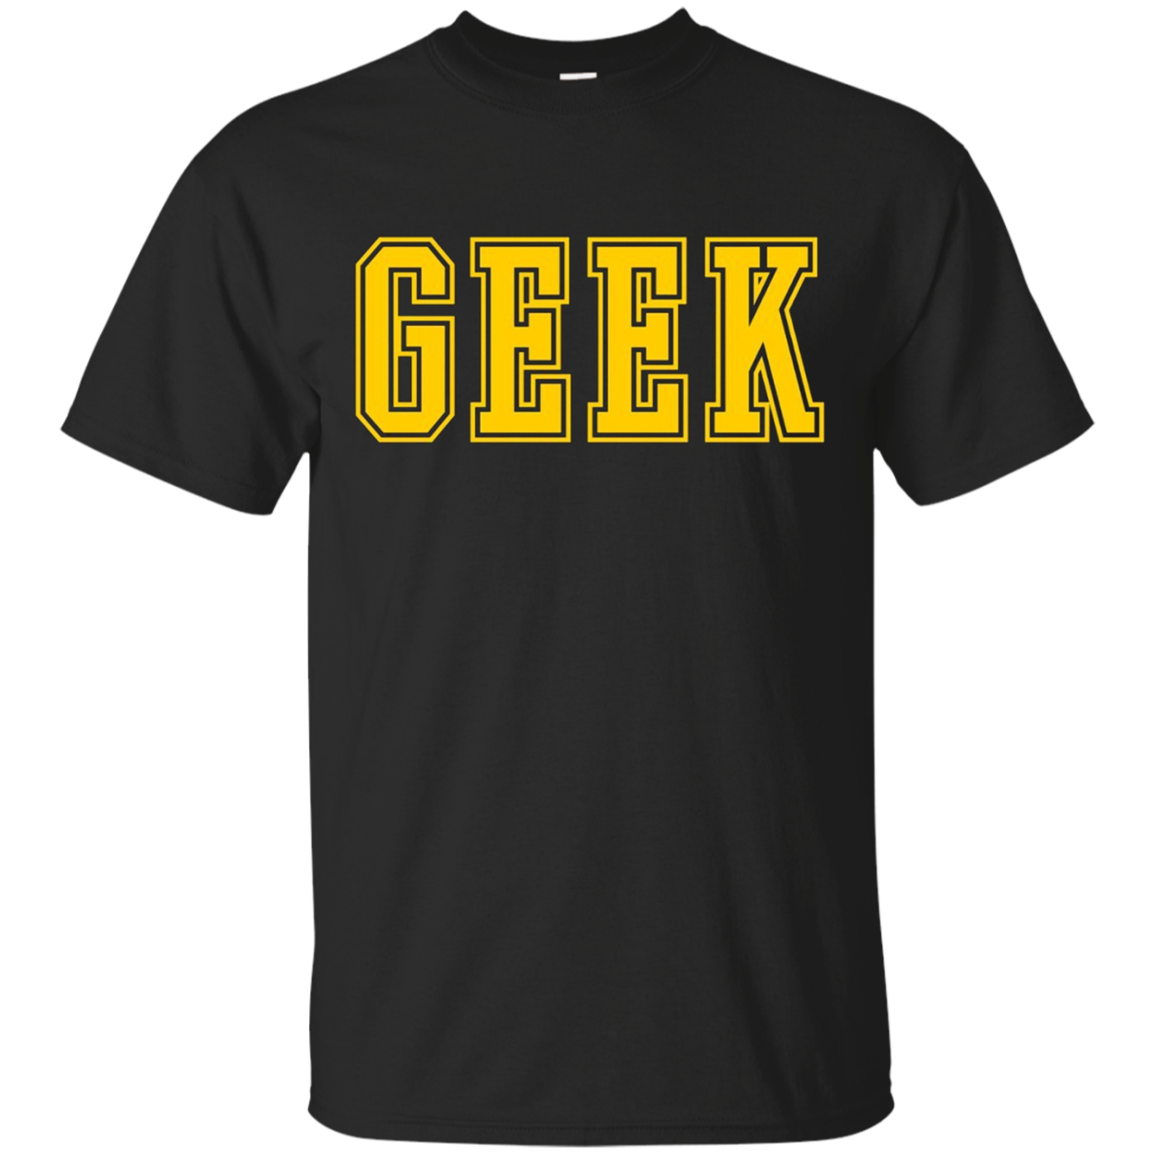 Vintage Retro Classic T-shirt For Computer Math Geeks Shirt